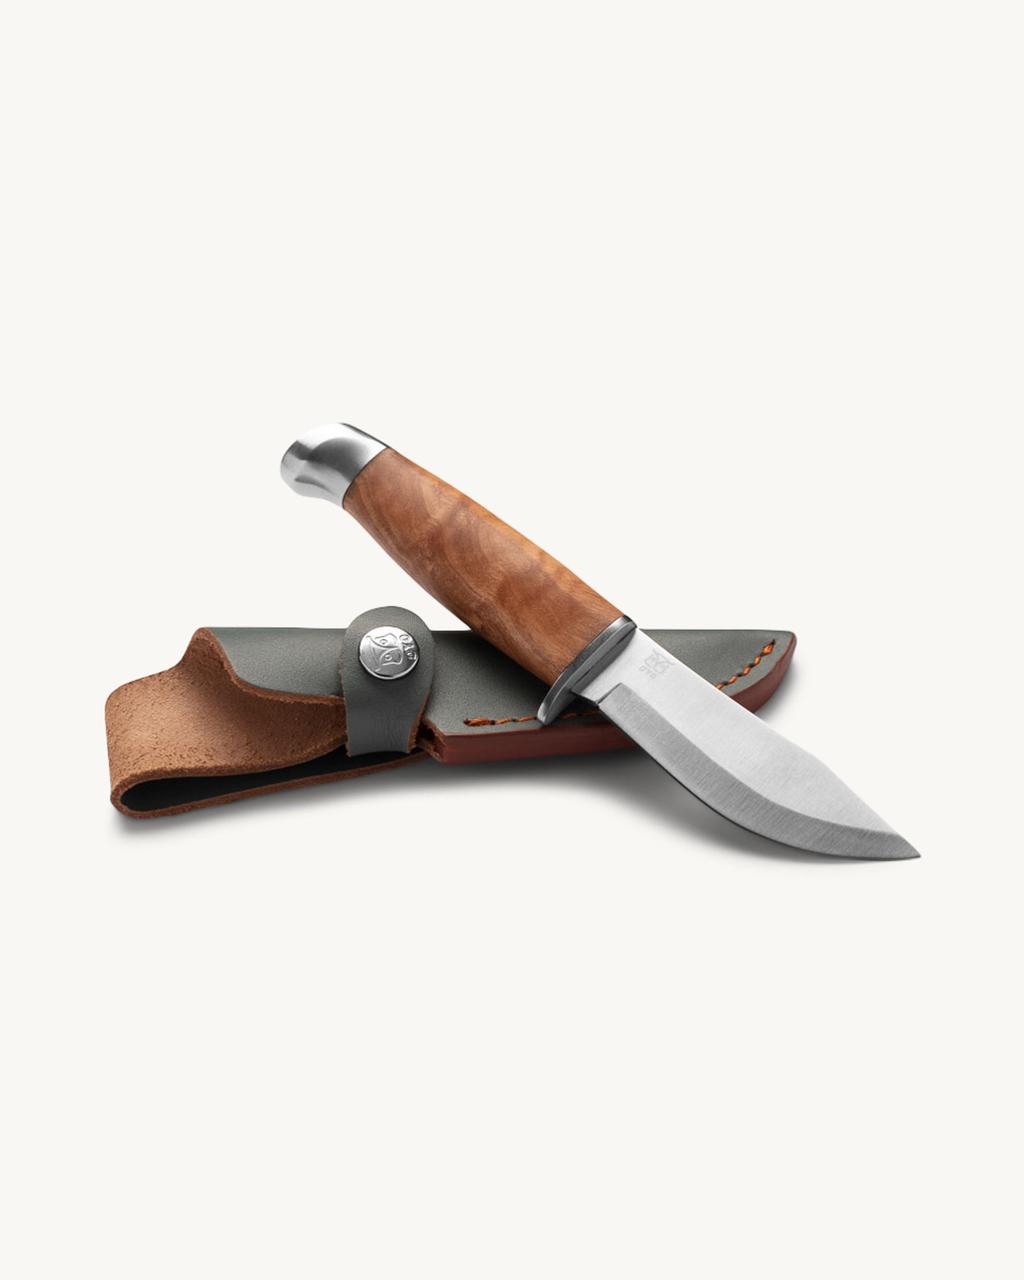 Geilo jr. knife w/leather sheath